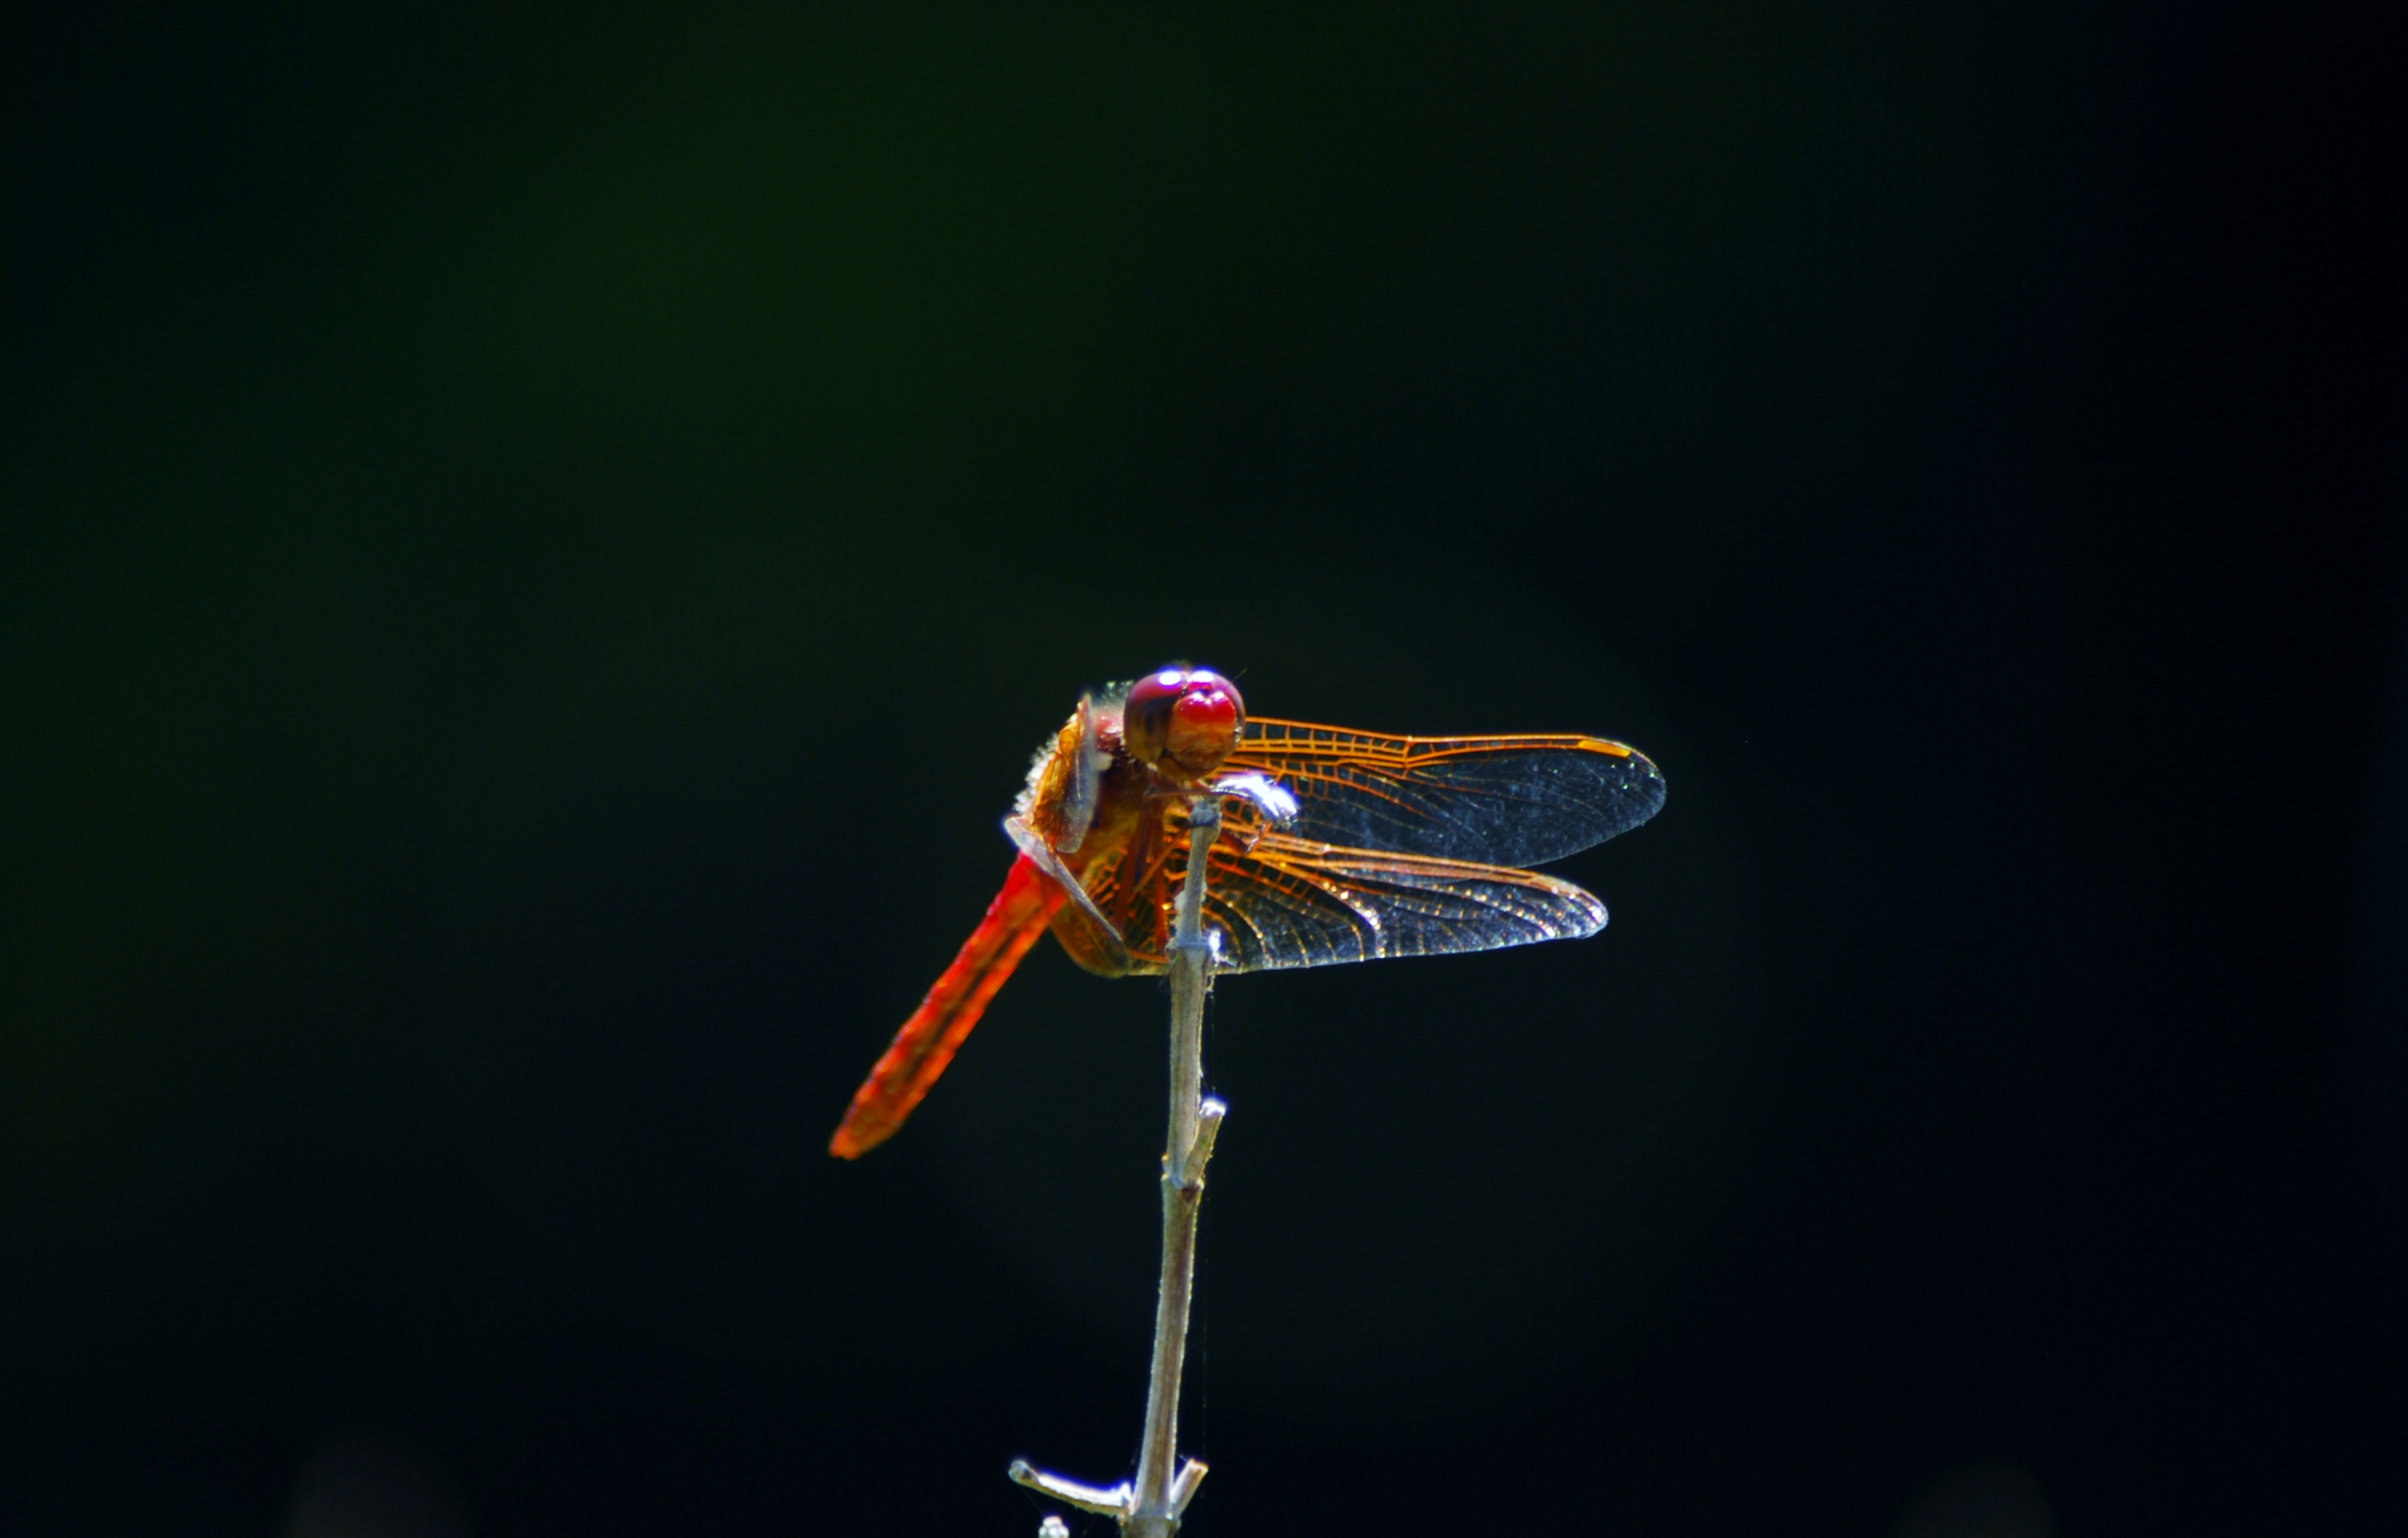 A dragon fly sitting around enjoying life